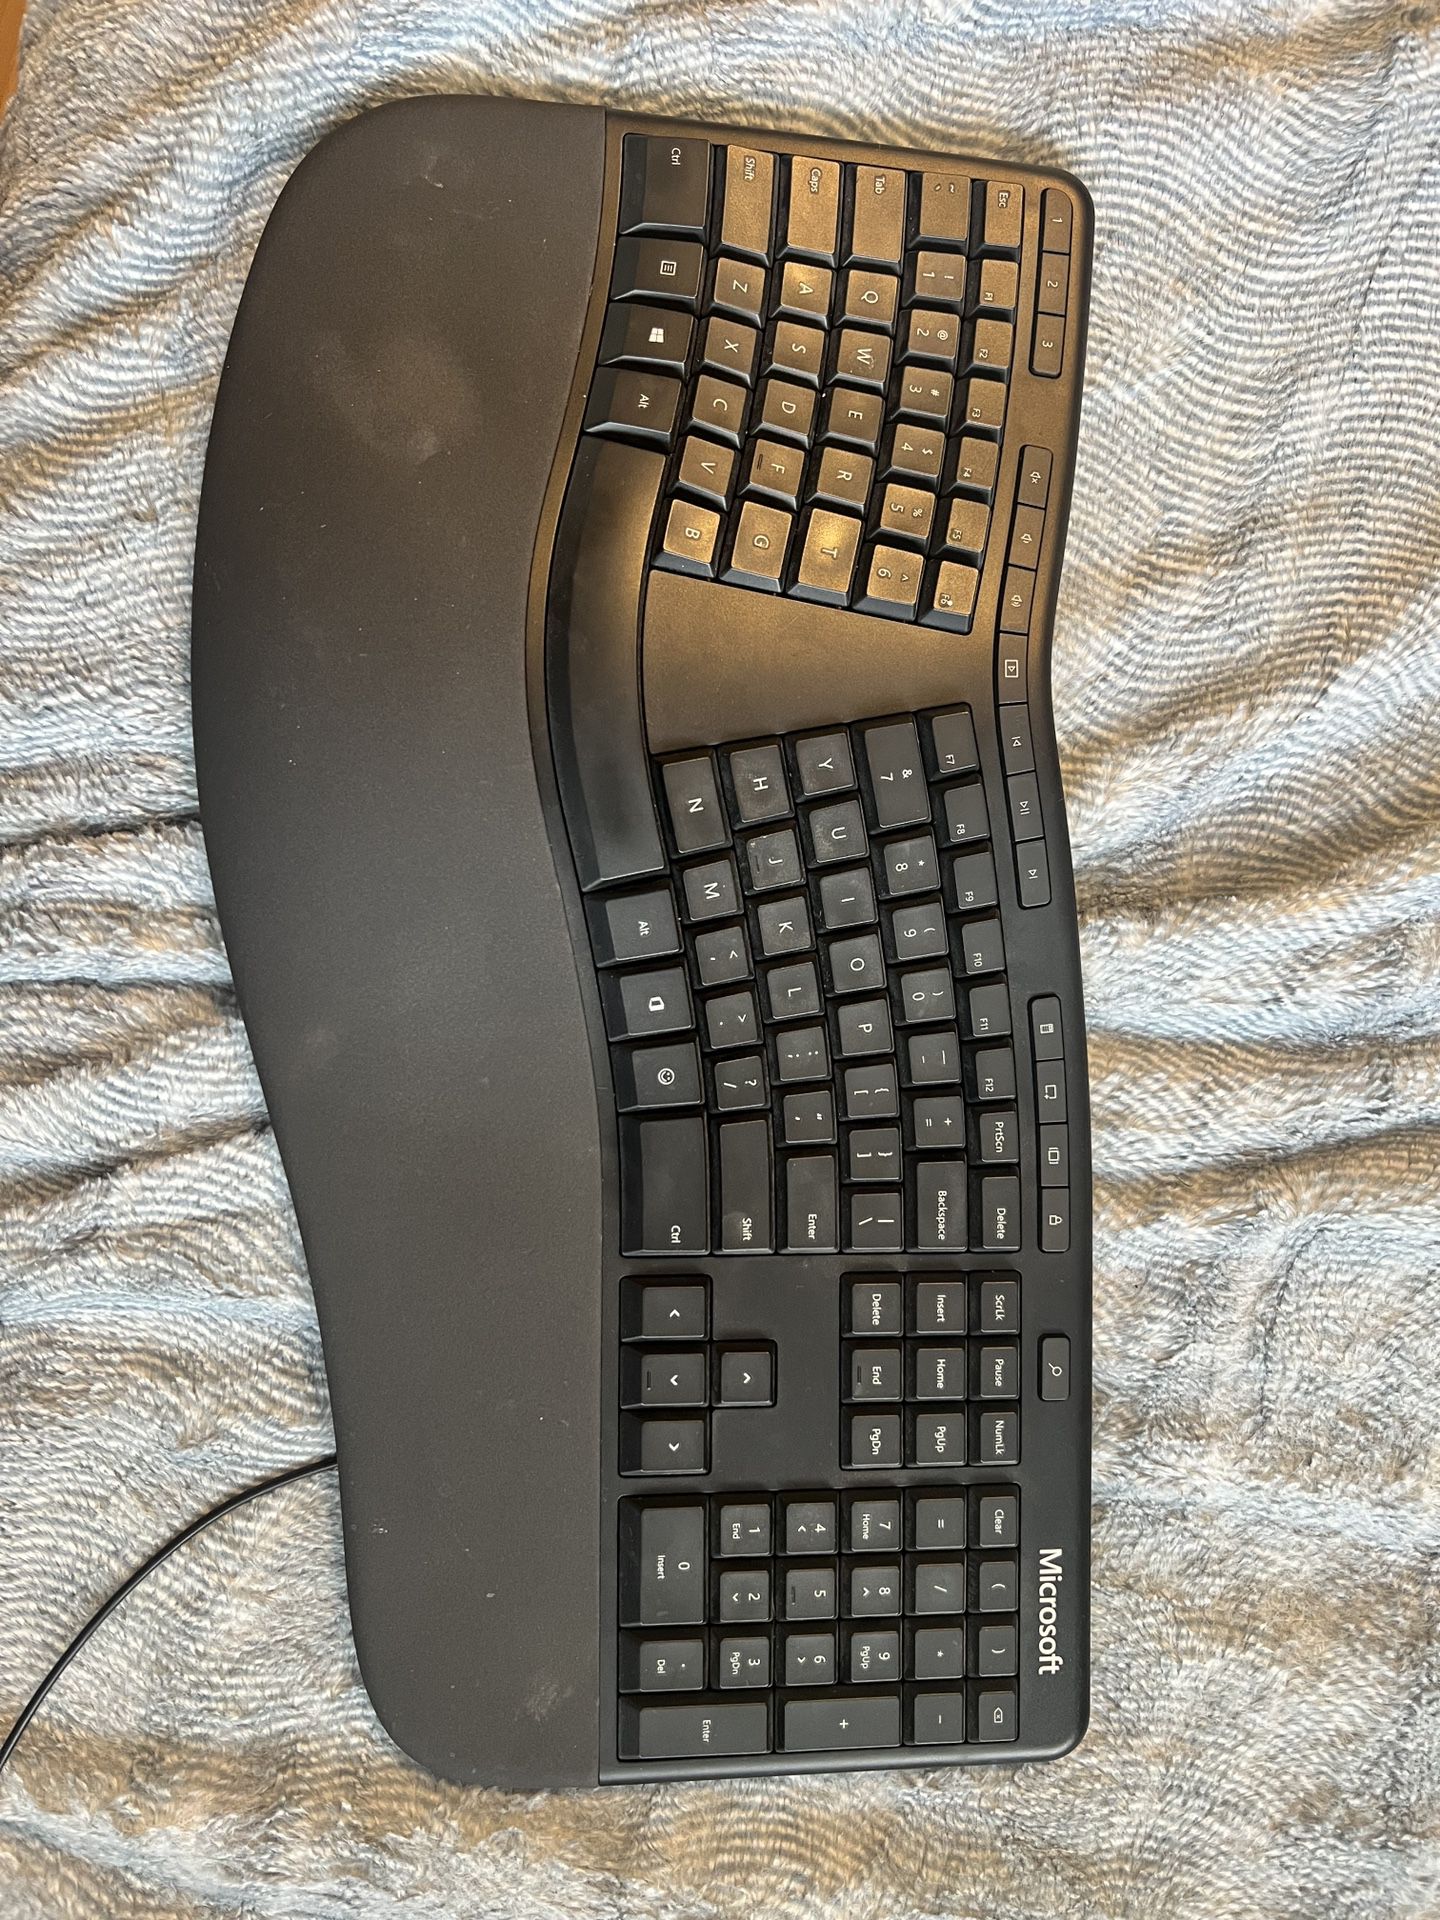 Microsoft keyboard